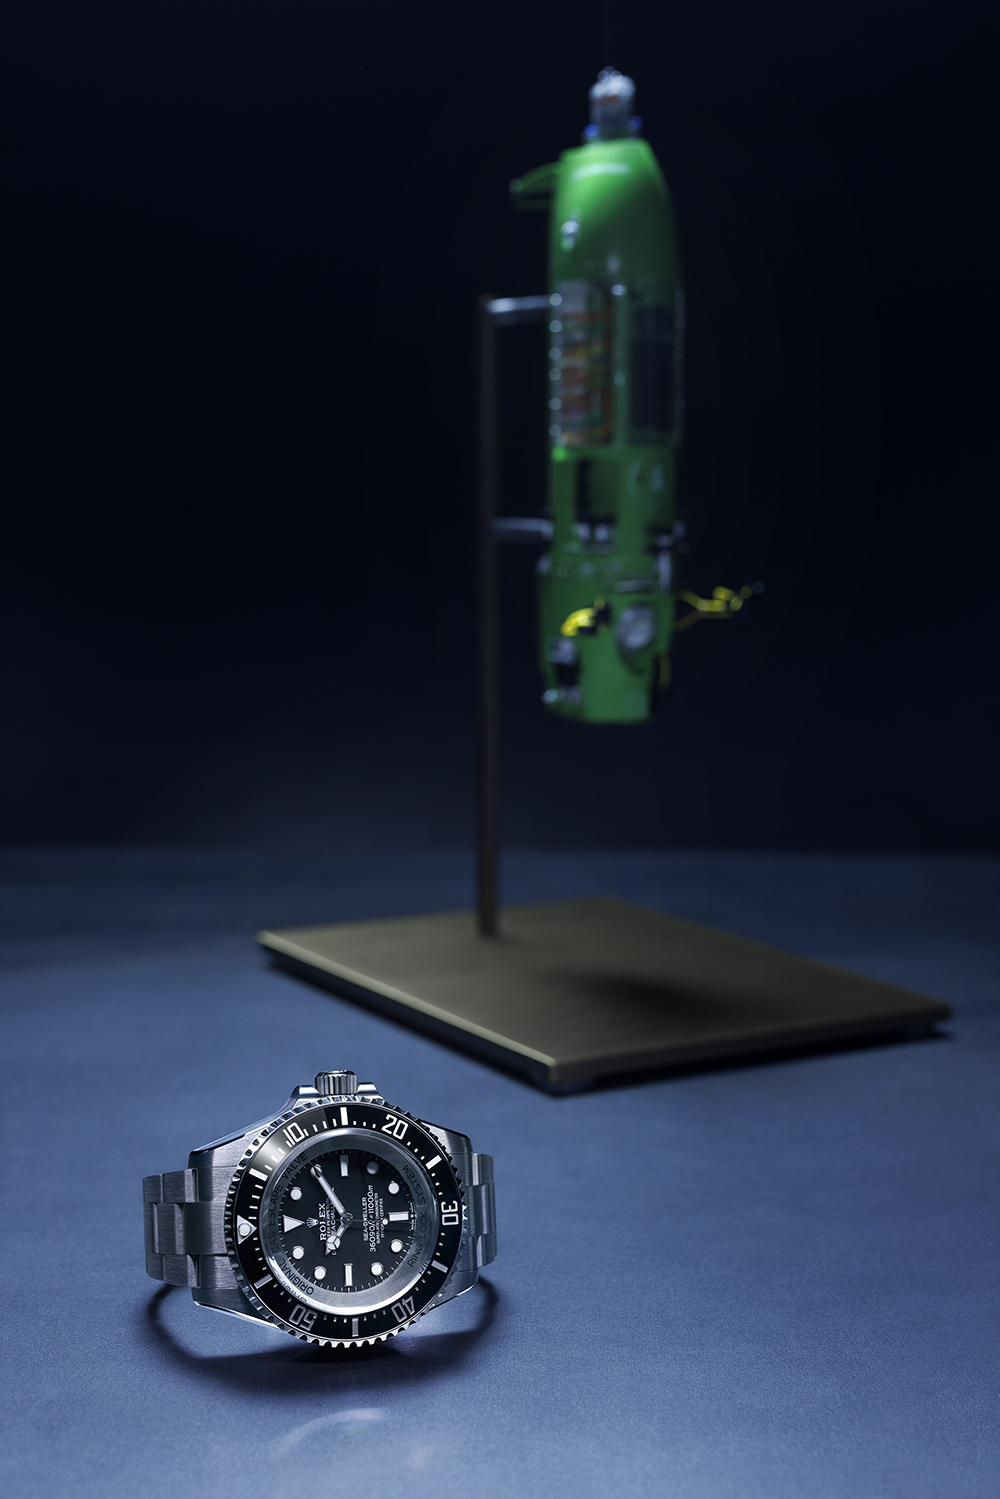 Oyster perpetual deepsea challenge, Rolex's first titanium watch